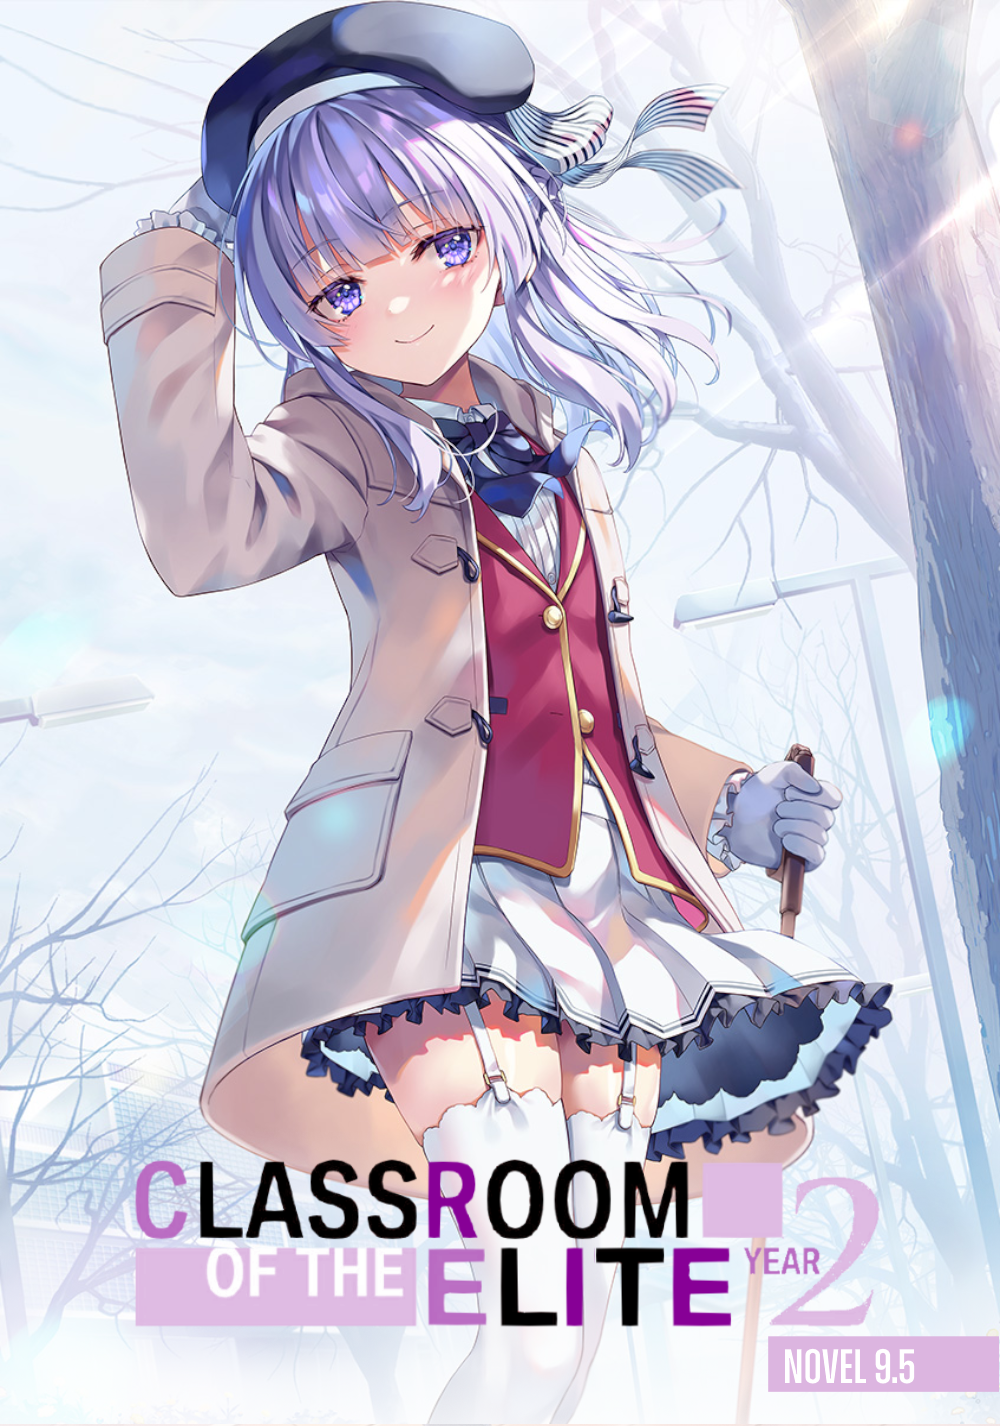 Classroom of the Elite: Year 2 (Light Novel) Vol. 7